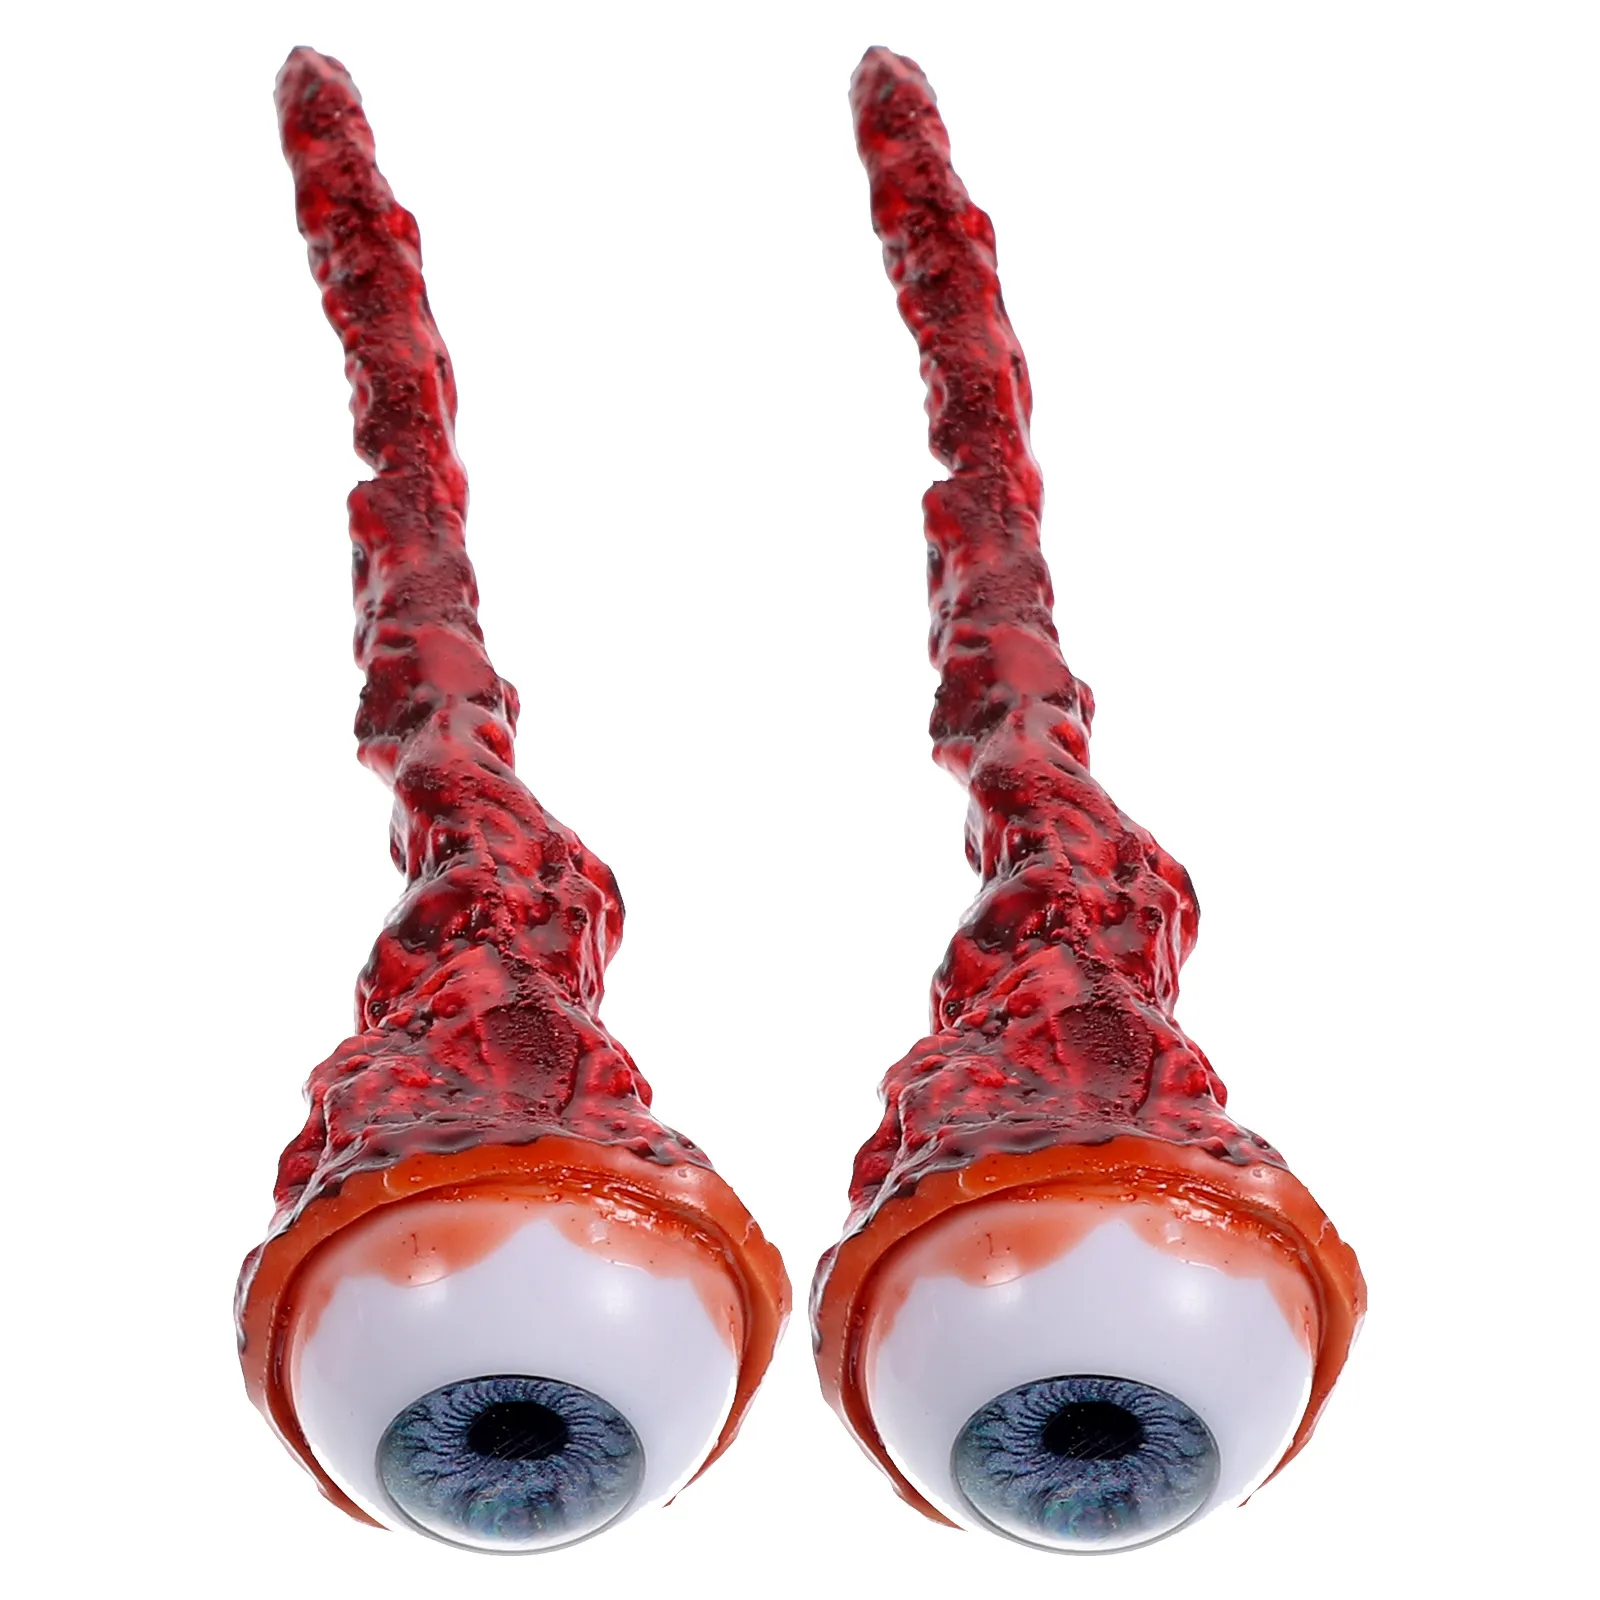 

Halloween Eyeballs Eyeball Props Horror Scary Fake Eyes Realistic Decorations Prop Dead Body Eye Balls Latex Toy Parts Creepy